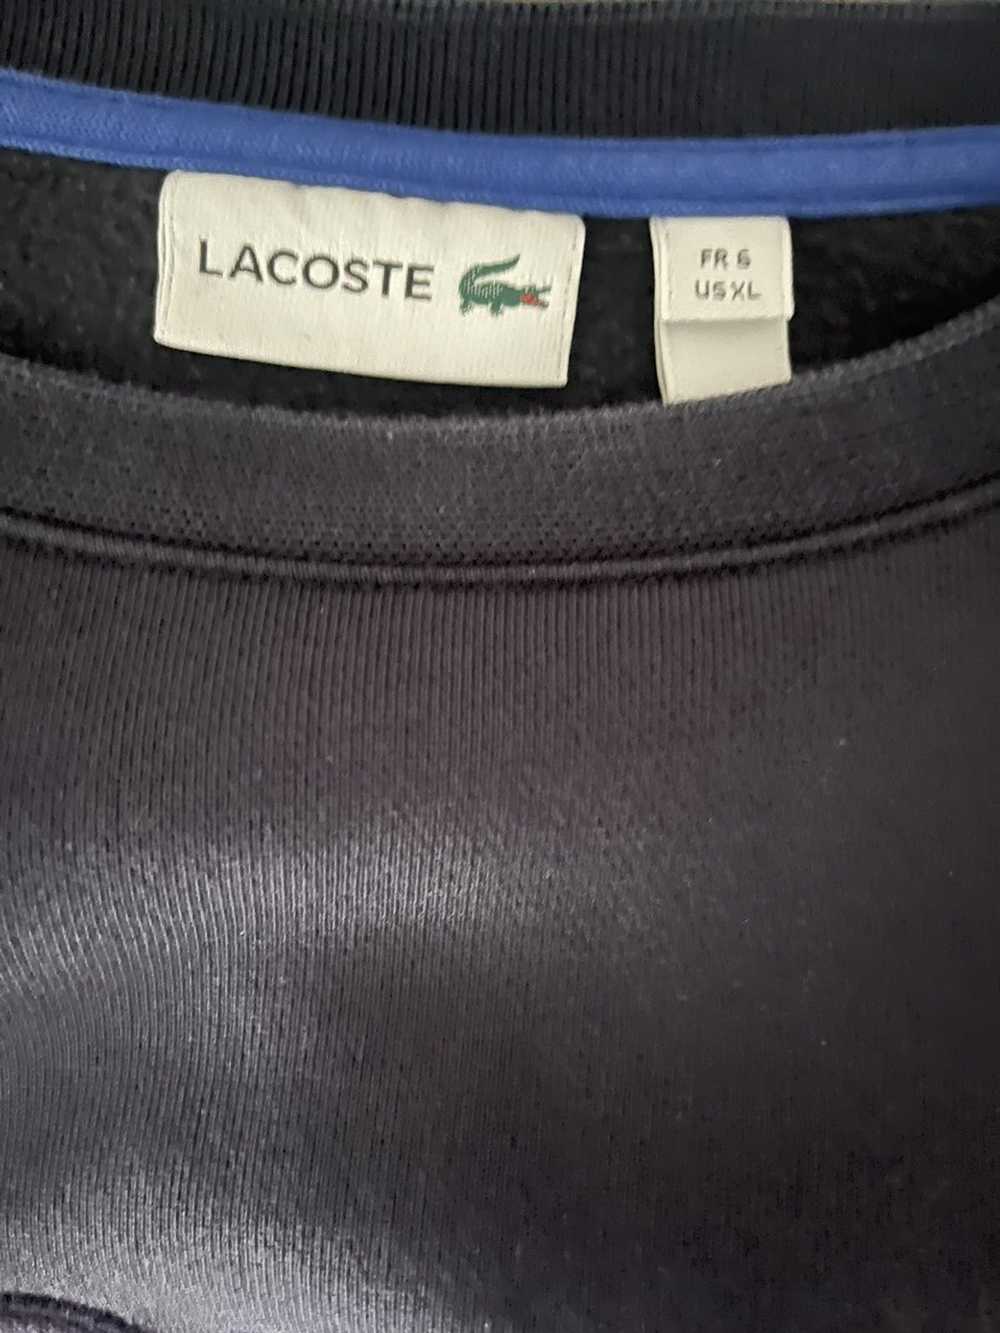 Lacoste Lacoste sweatshirt vintage - image 3